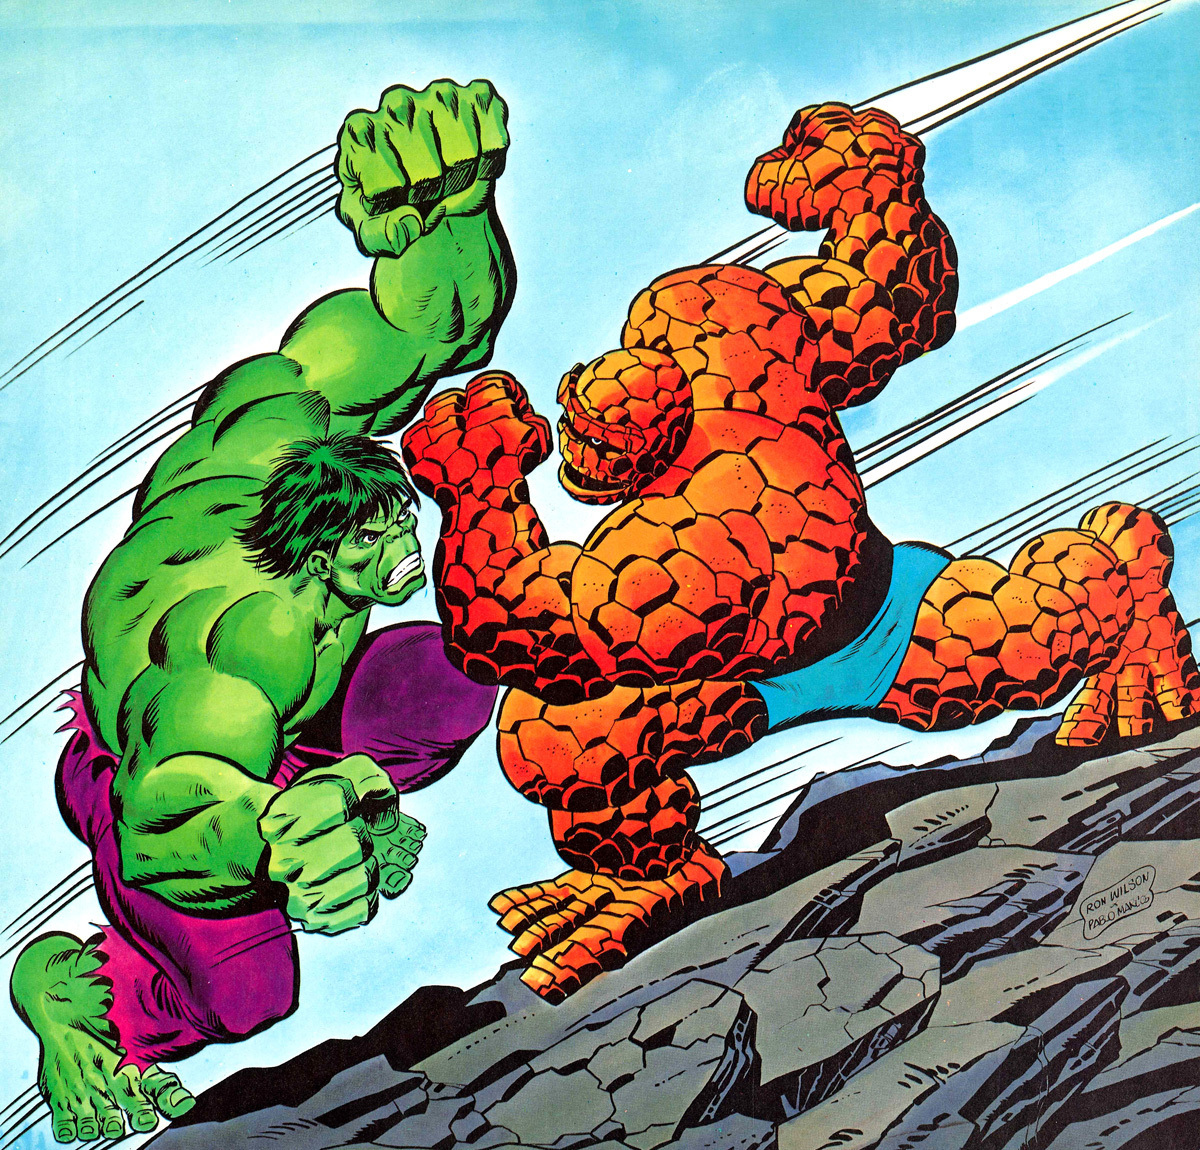 Hulk vs the Thing